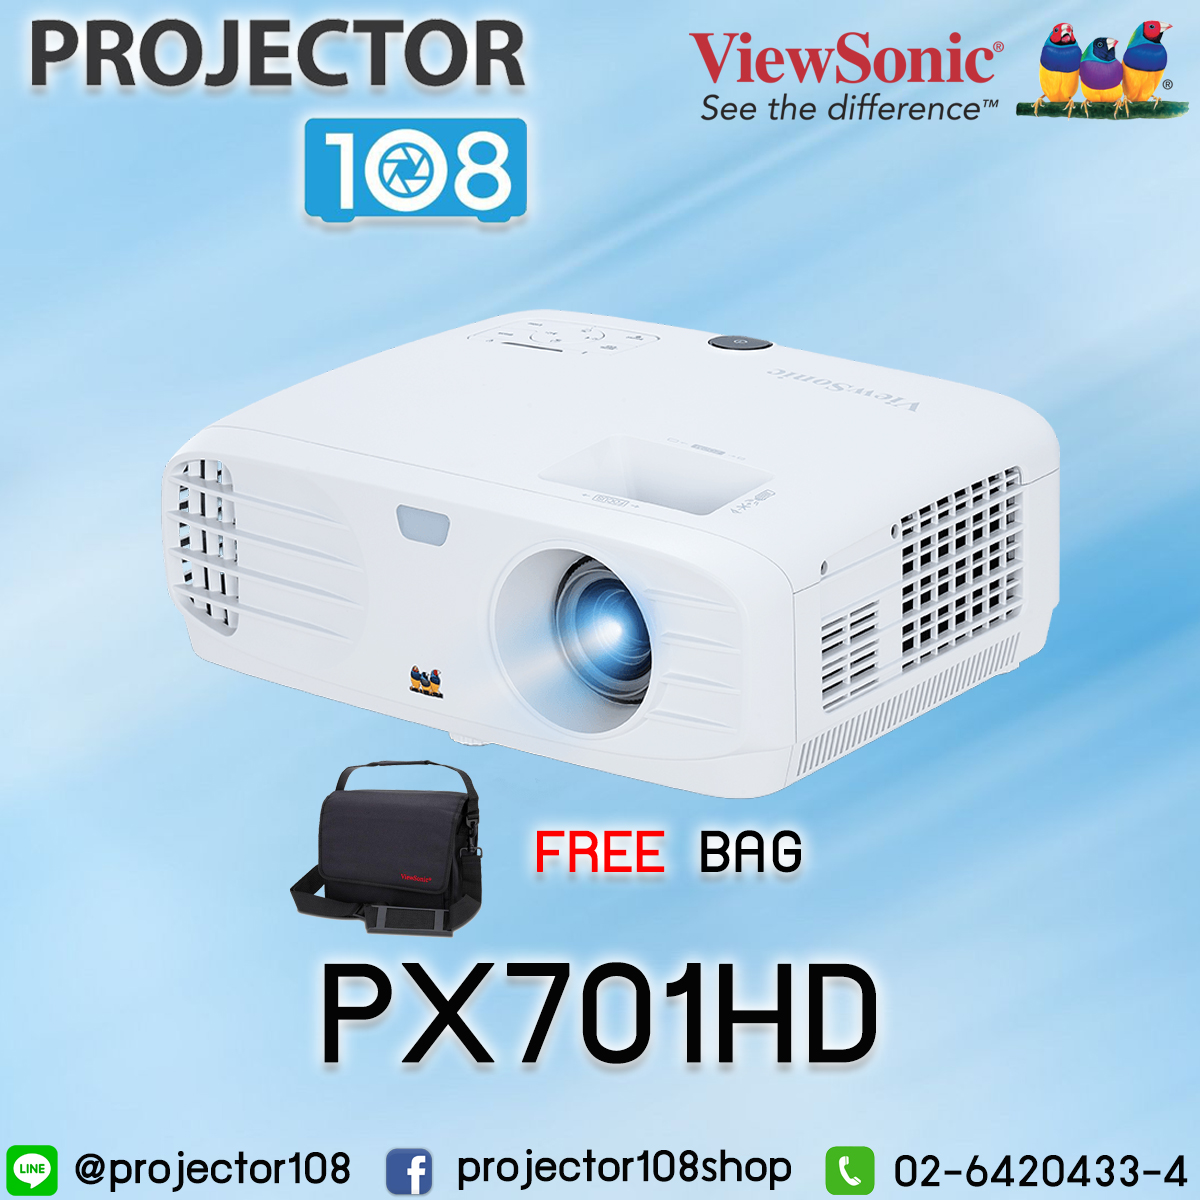 Viewsonic PX701HD DLP Projector (3,500 ANSI Lumens/Full HD) เครื่องฉายโปรเจคเตอร์ Spec เทียบเท่า Acer H6517ABD (แถมฟรีกระเป๋าโปรเจคเตอร์)